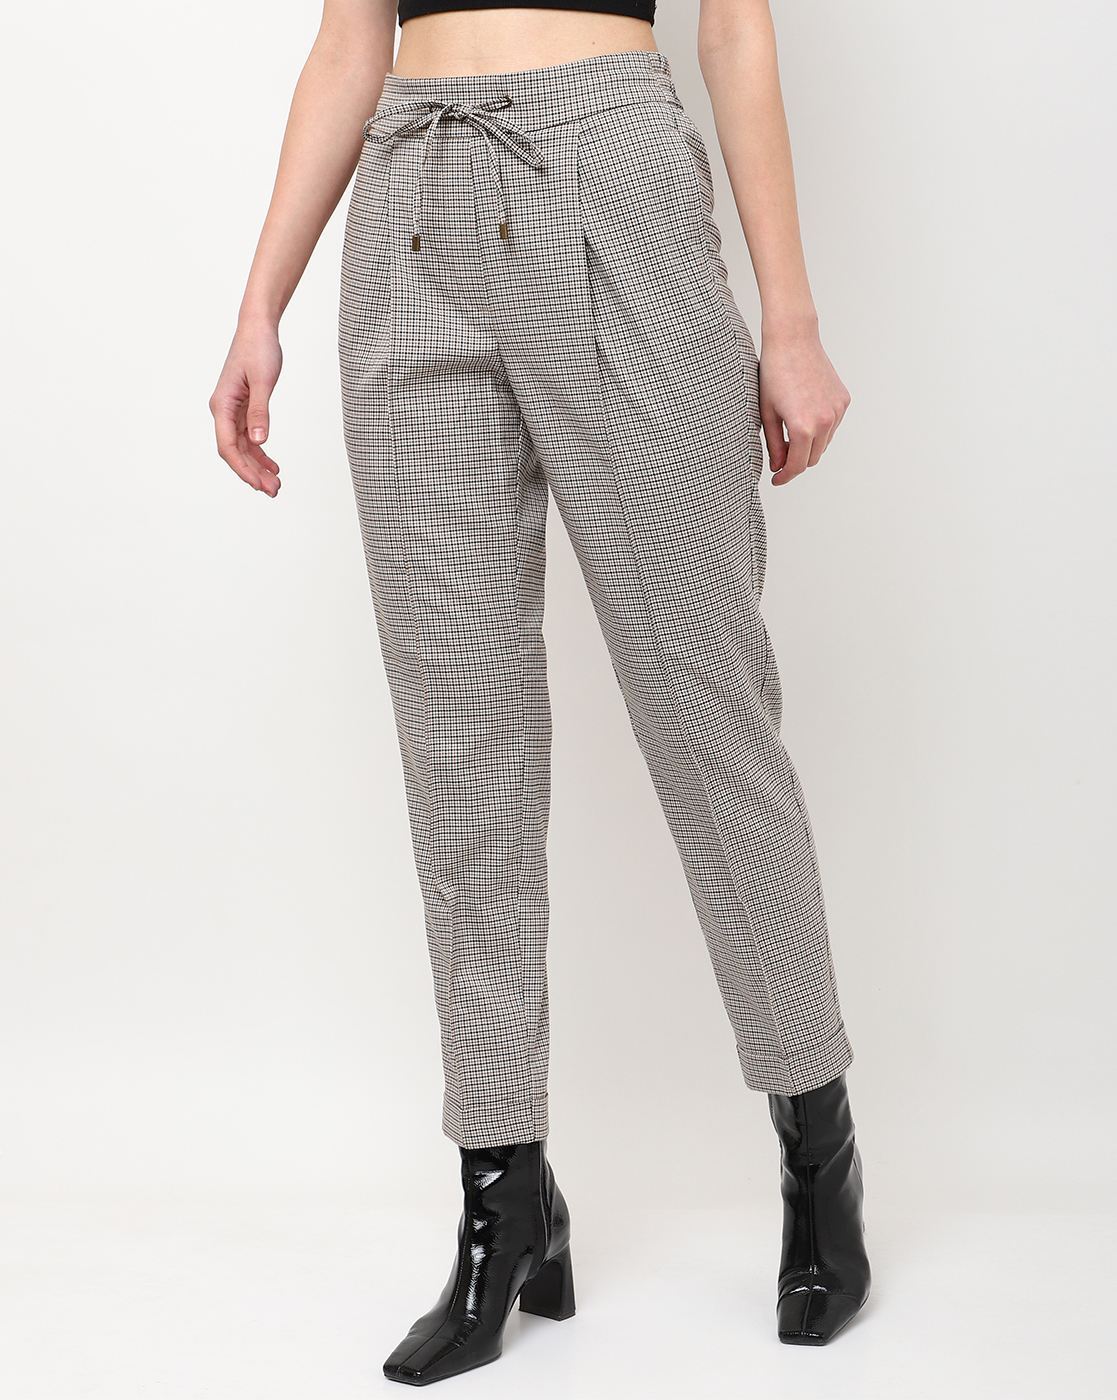 gingham: Women's Pants | Dillard's